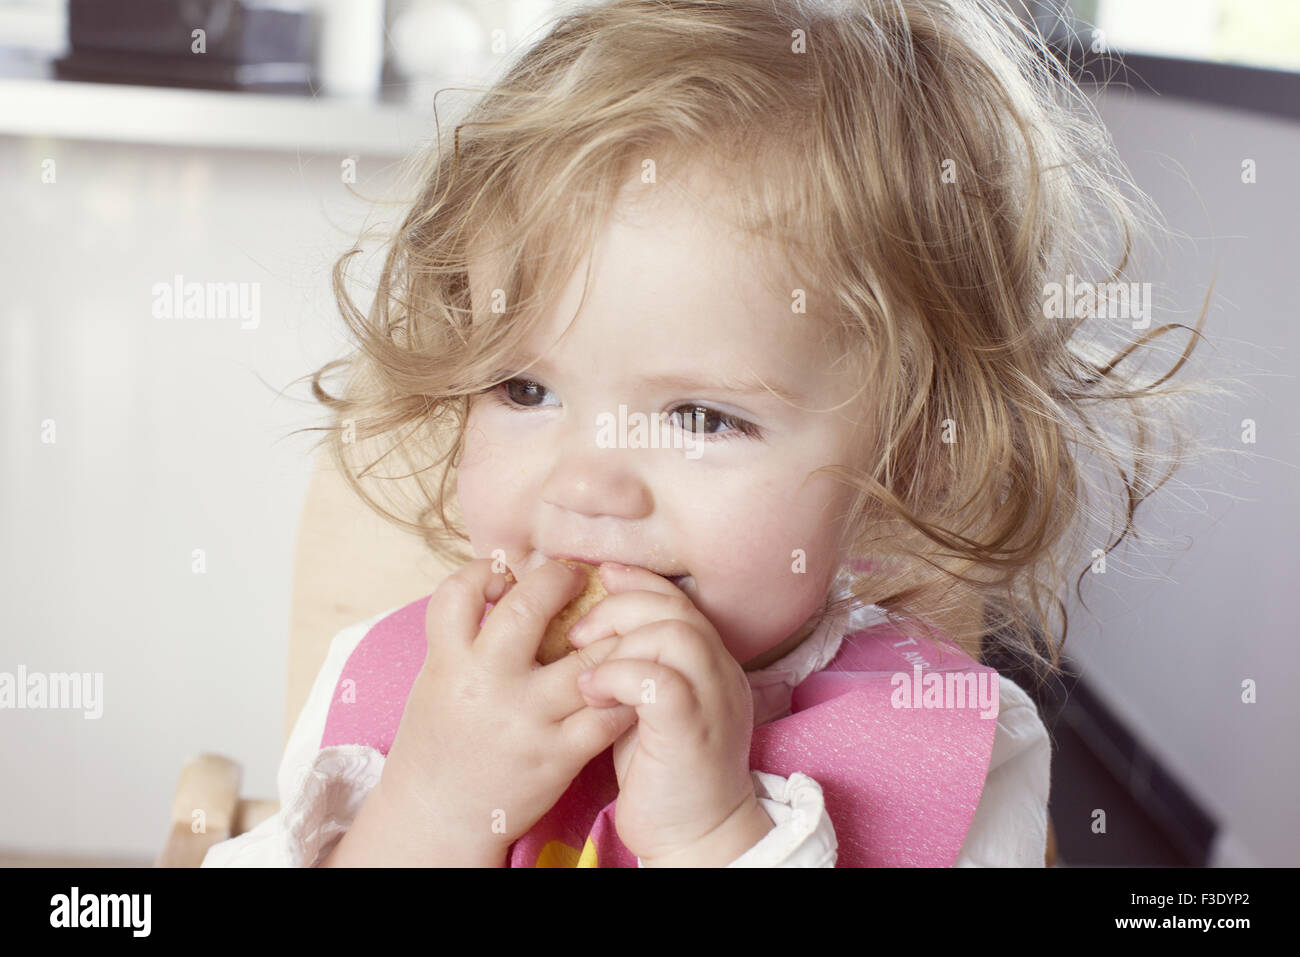 Baby girl eating snack, portrait Stock Photo